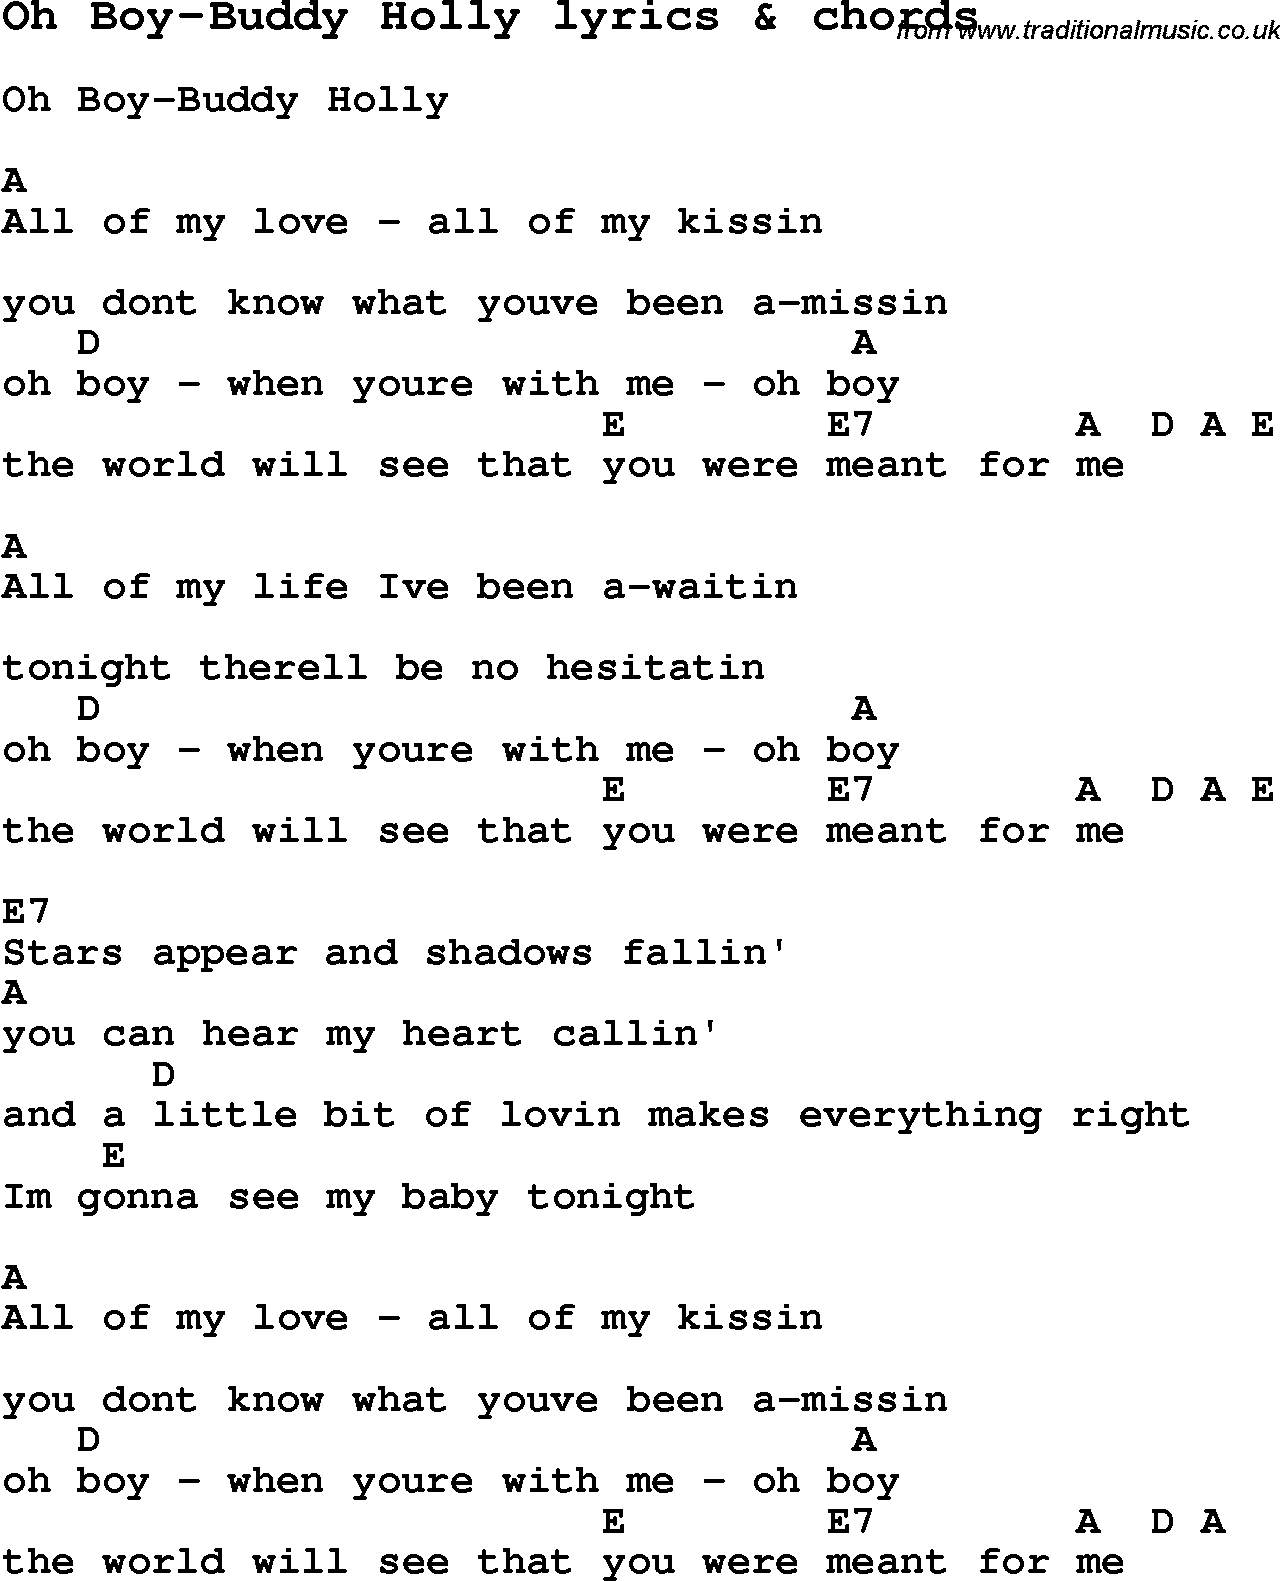 Love Song Lyrics for: Oh Boy-Buddy Holly with chords for Ukulele, Guitar Banjo etc.